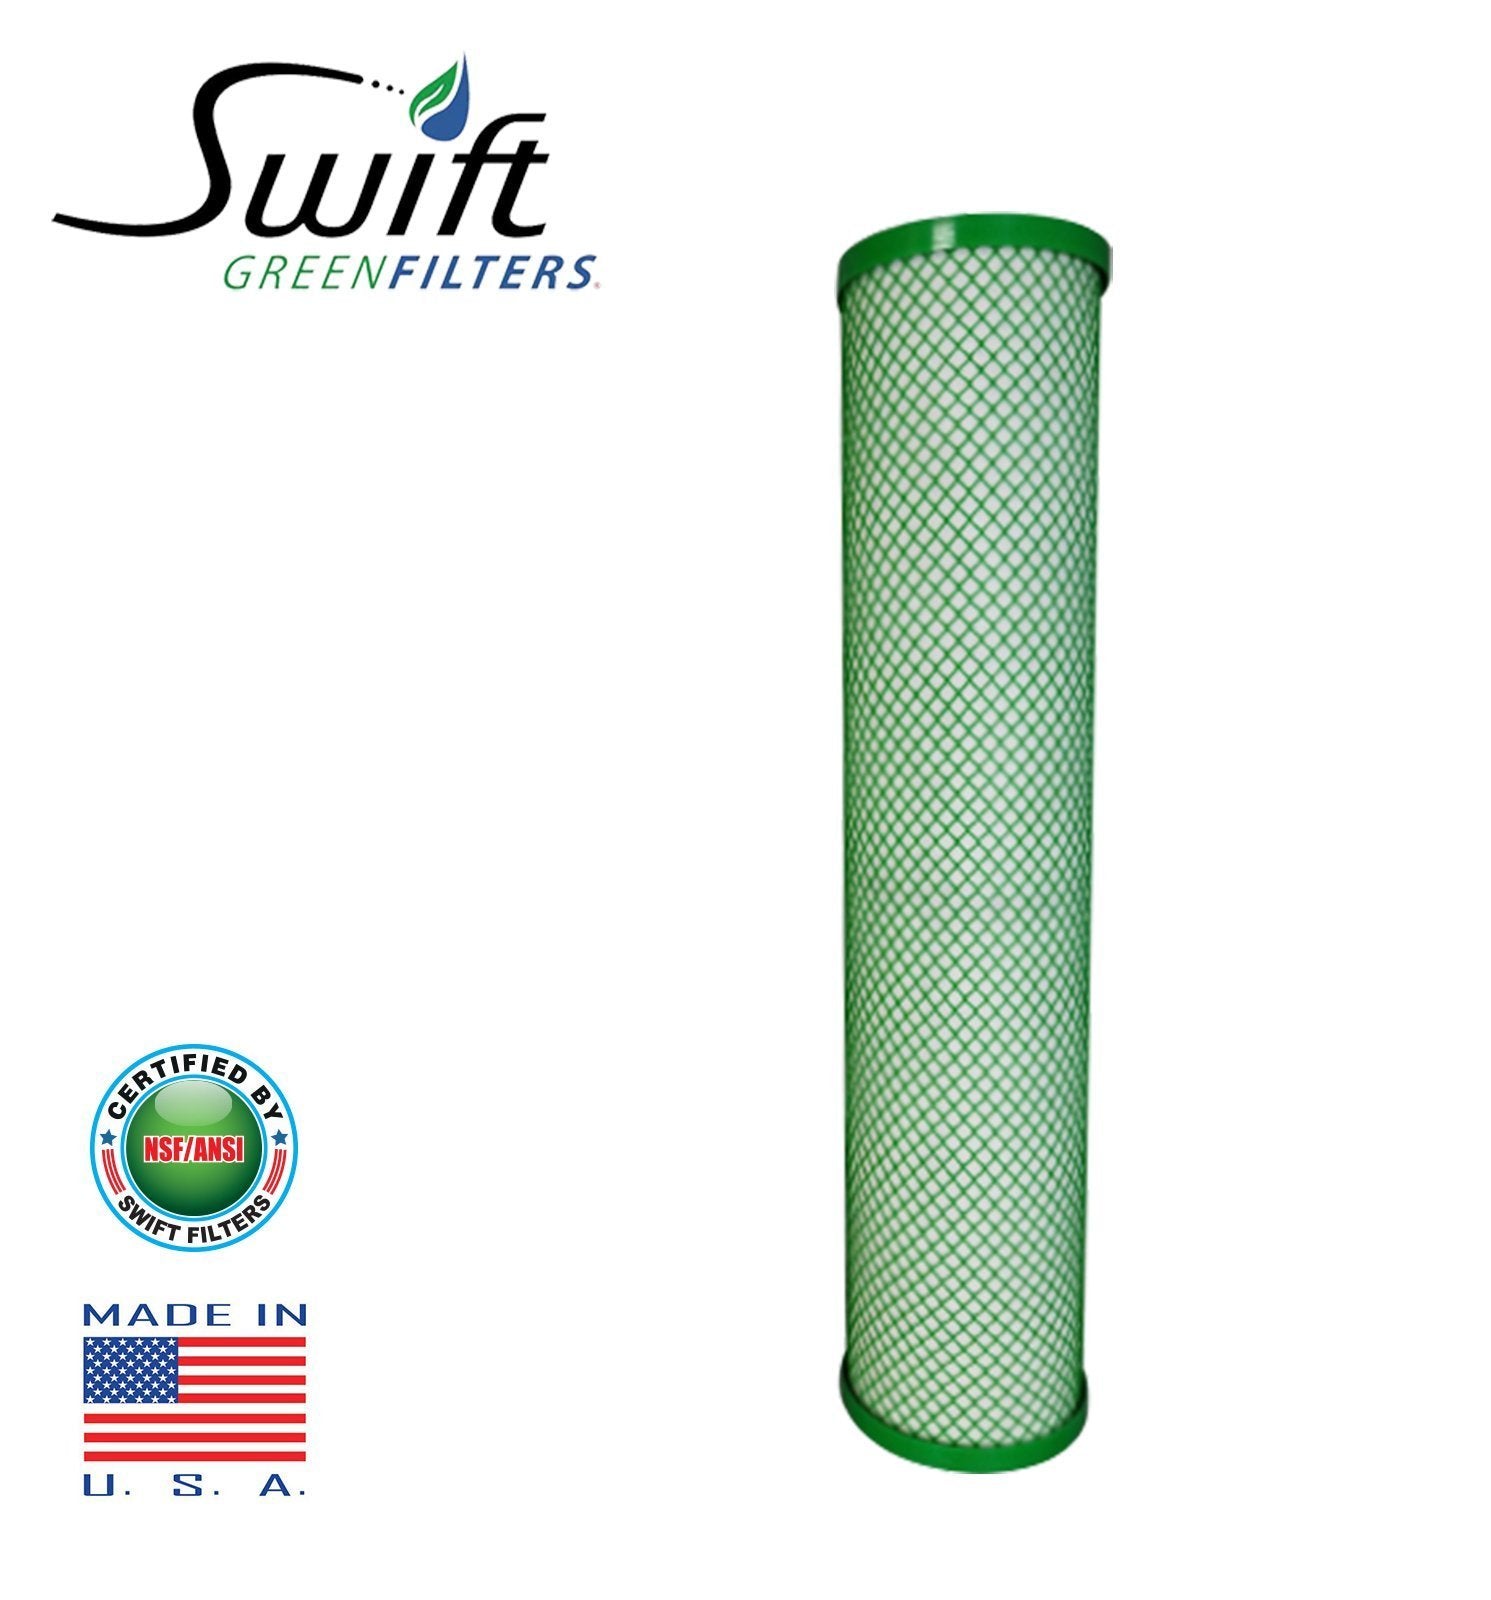 Swift (SGFB10CL2) 9.75"x 4.5" CL2 Green Block Carbon Filter 10 Micron By Swift Green Filters - The Filters Club